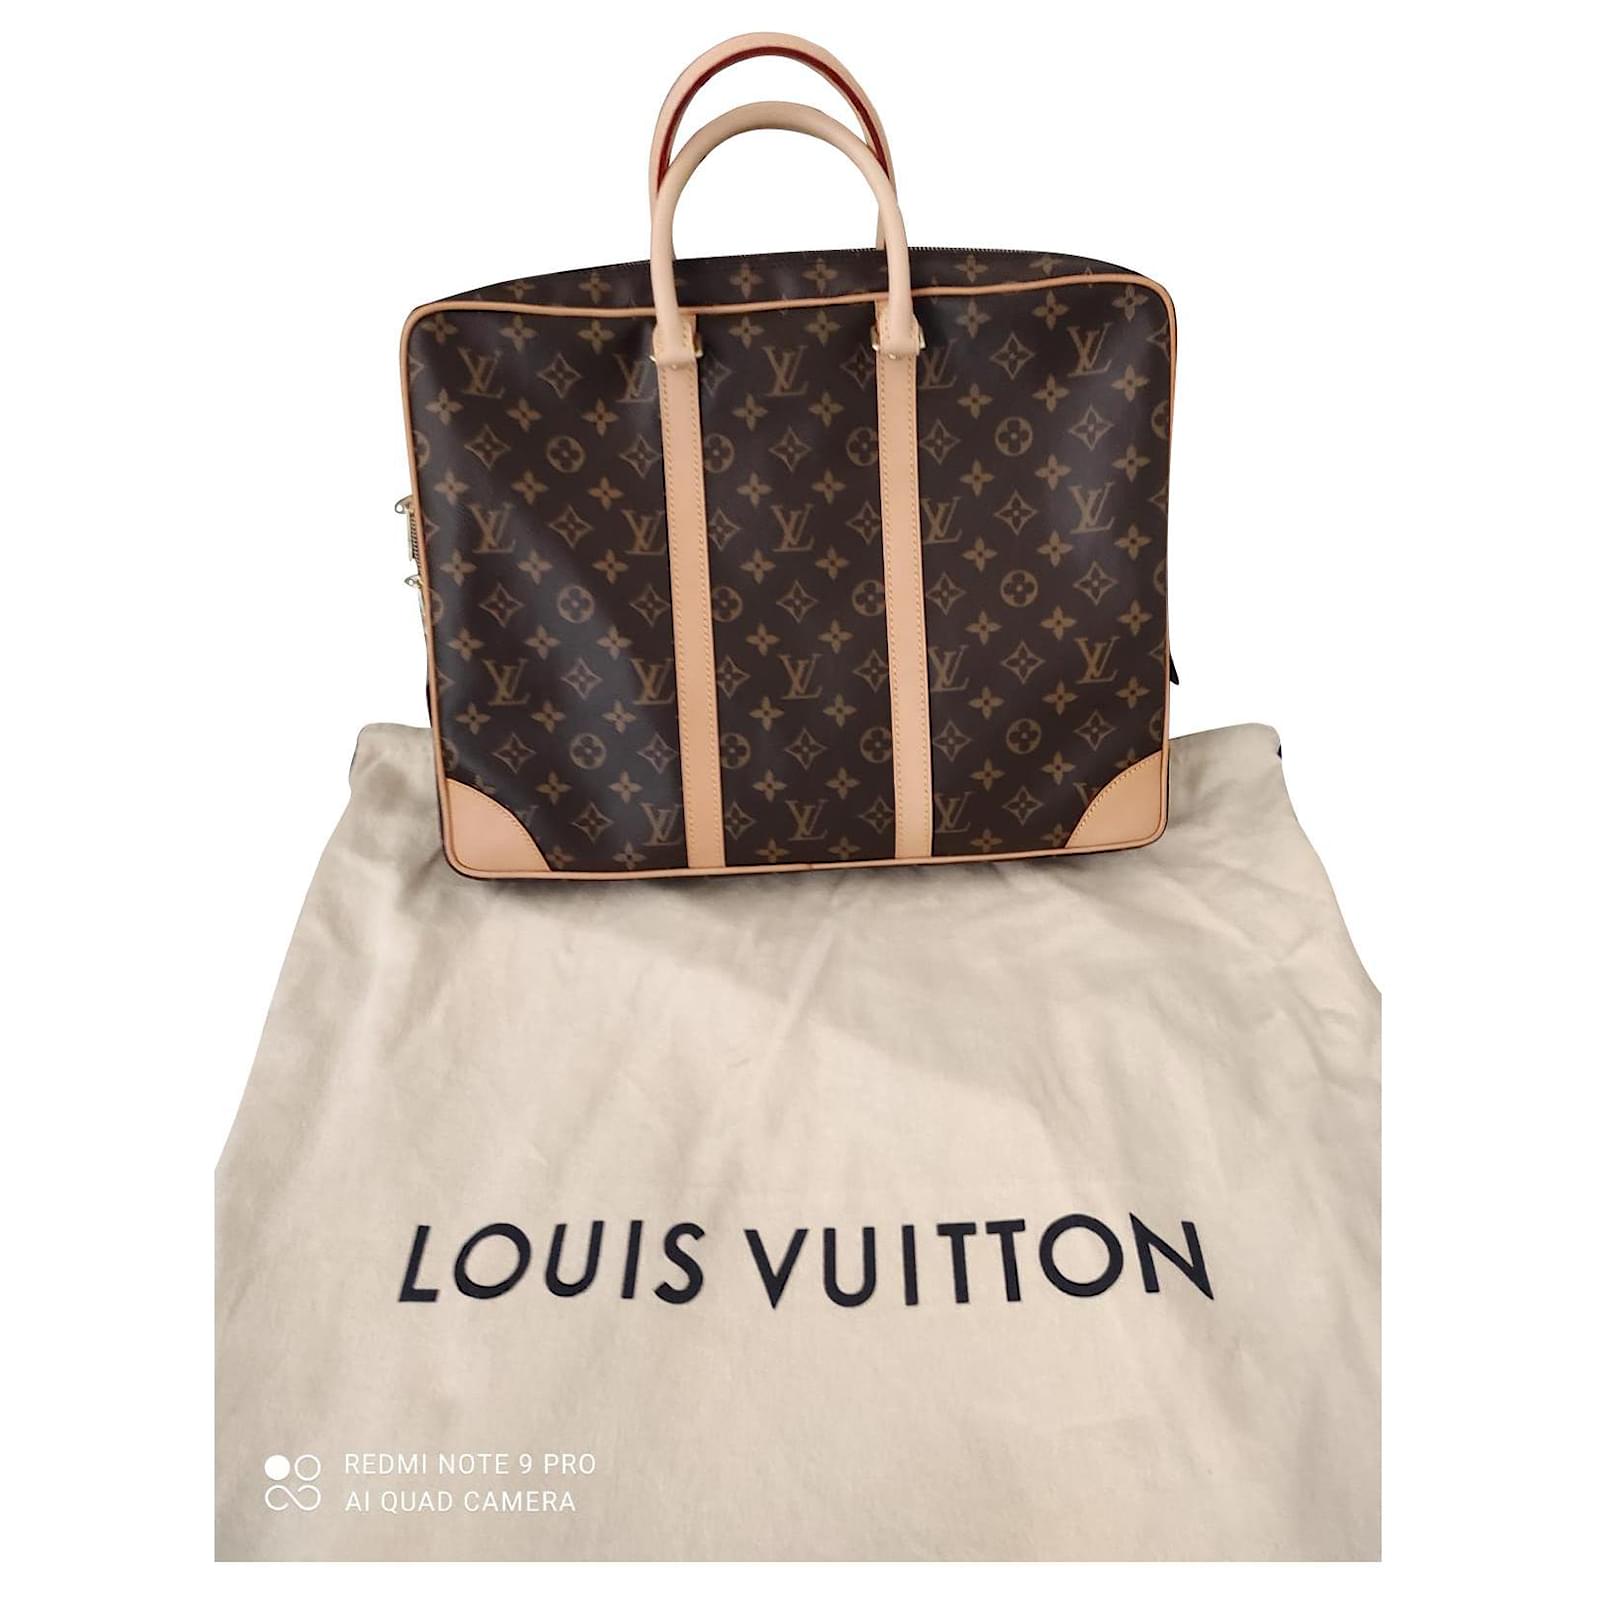 Louis Vuitton documents holder.